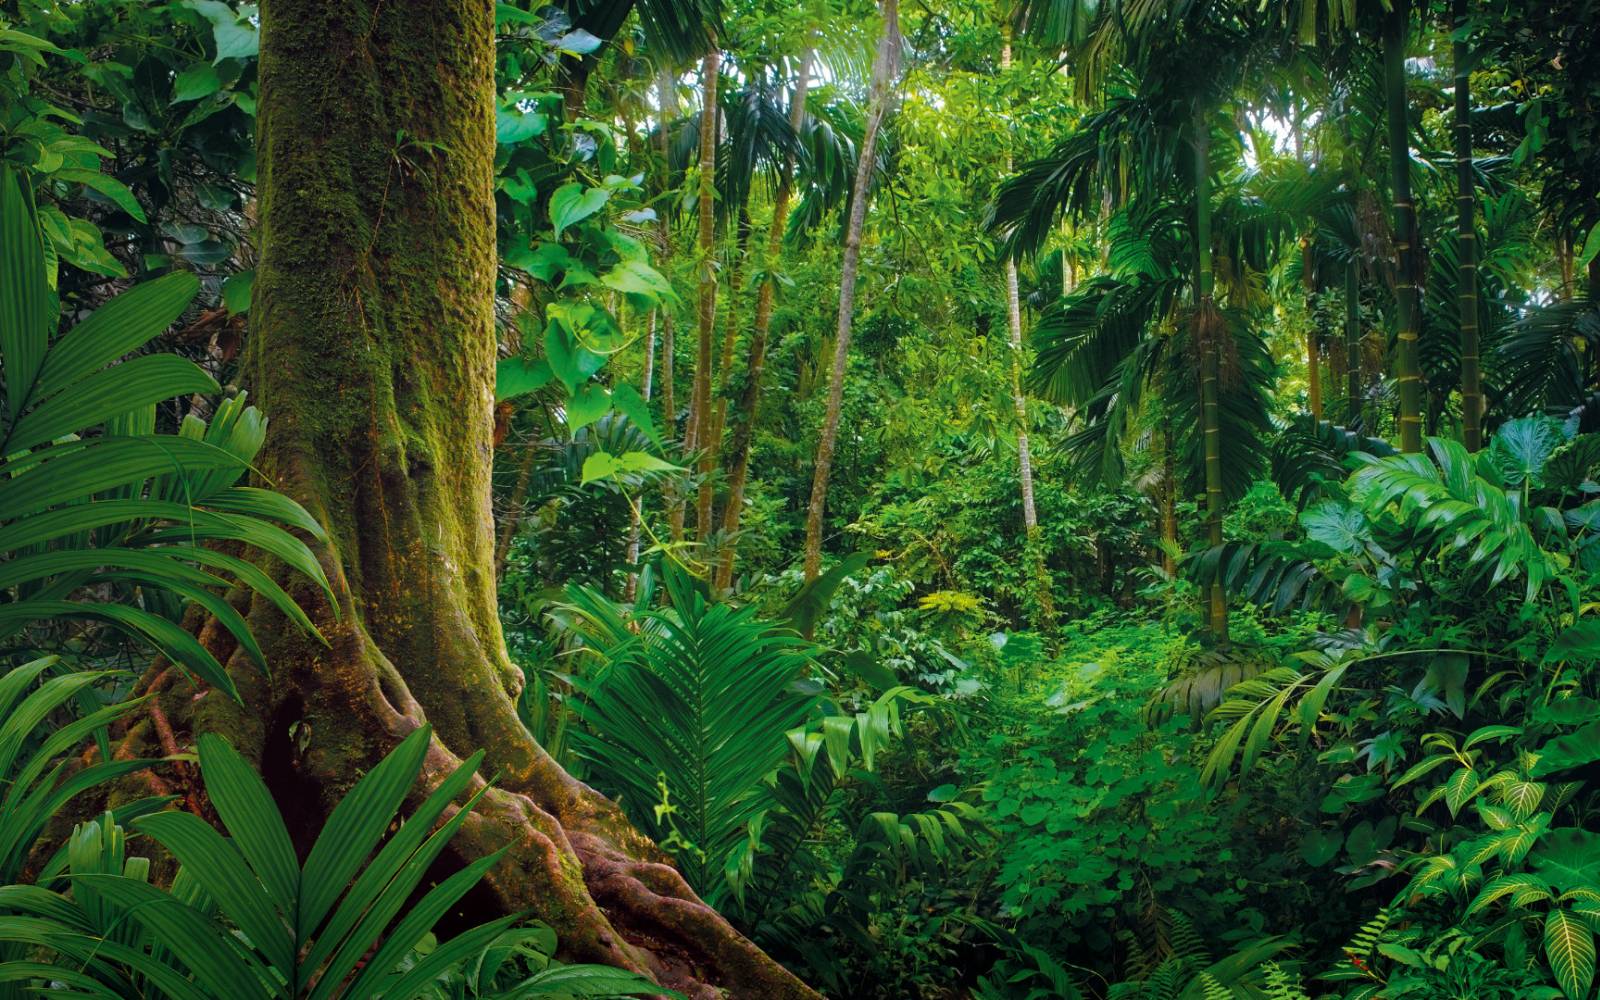 Rainforest with green vegetation